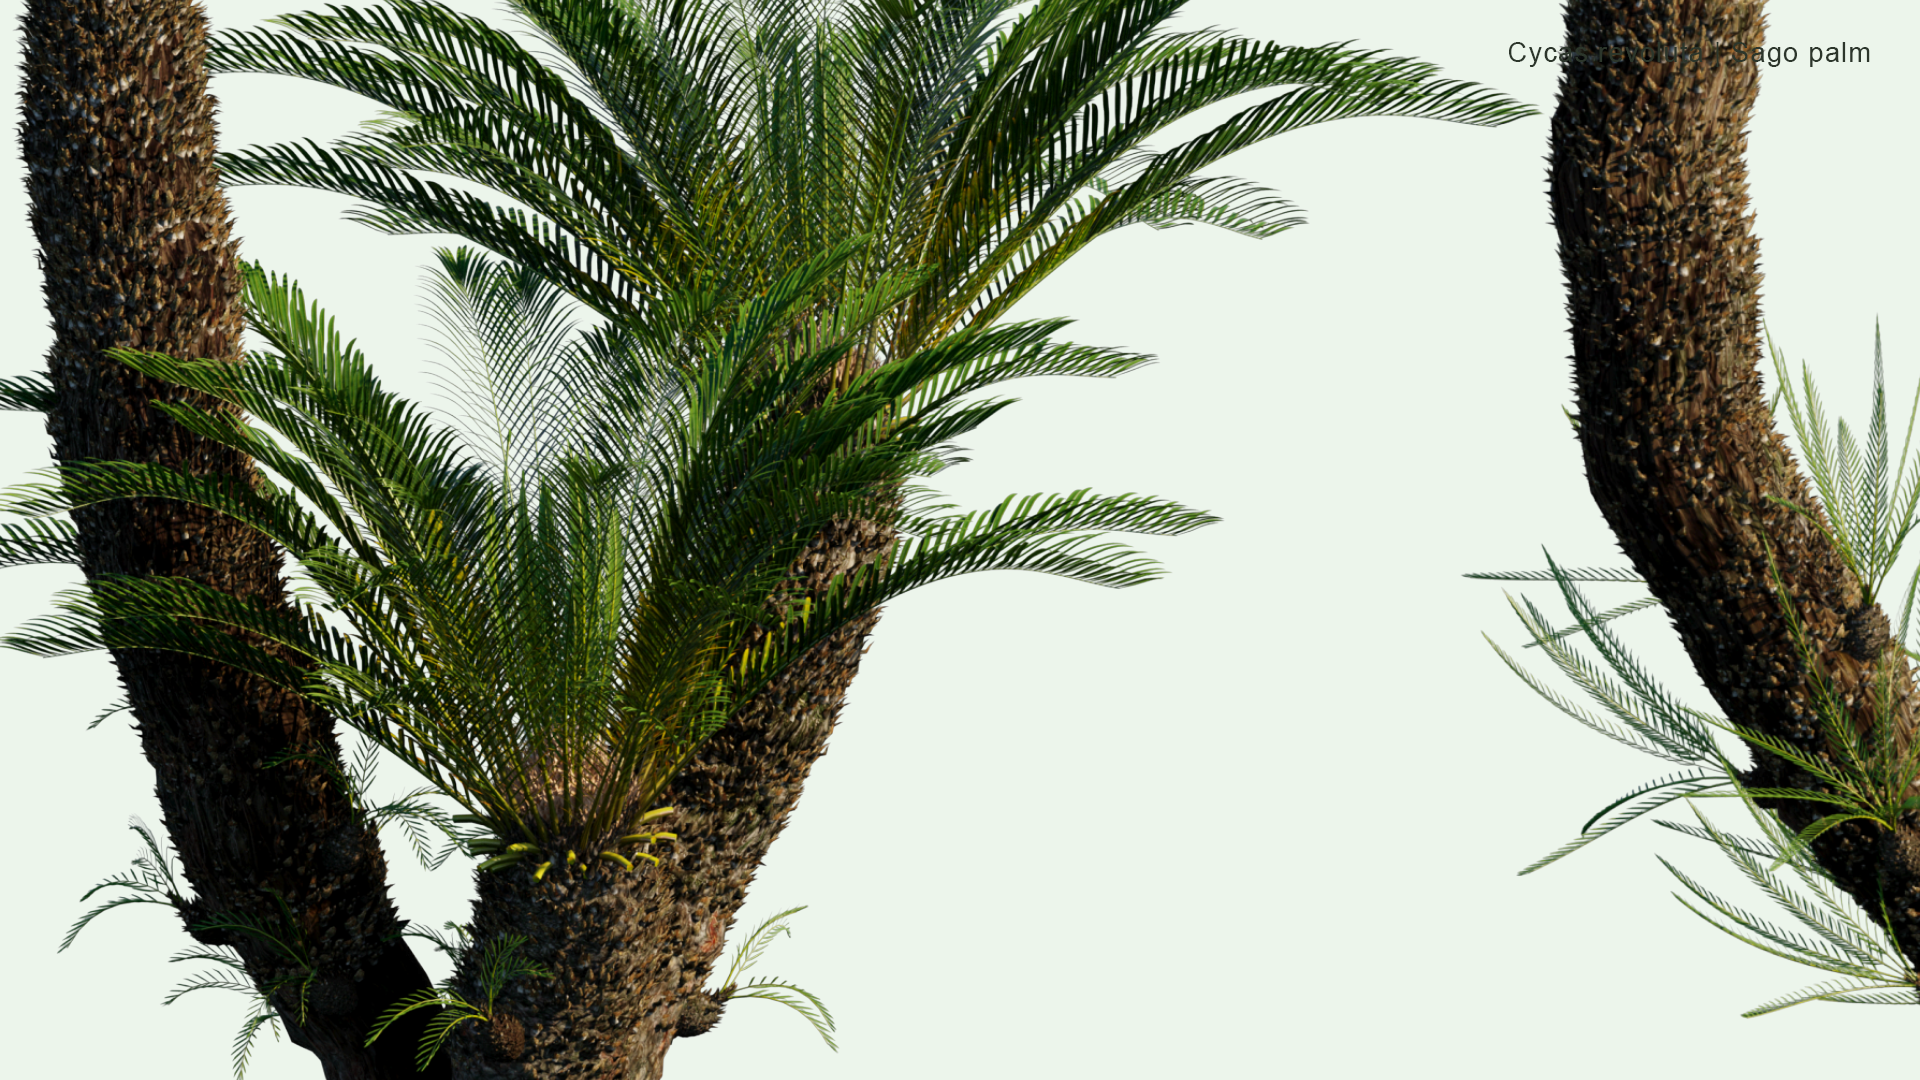 2D  Cycas Revoluta - Sago Palm, King Sago, Sago Cycad, Japanese Sago Palm